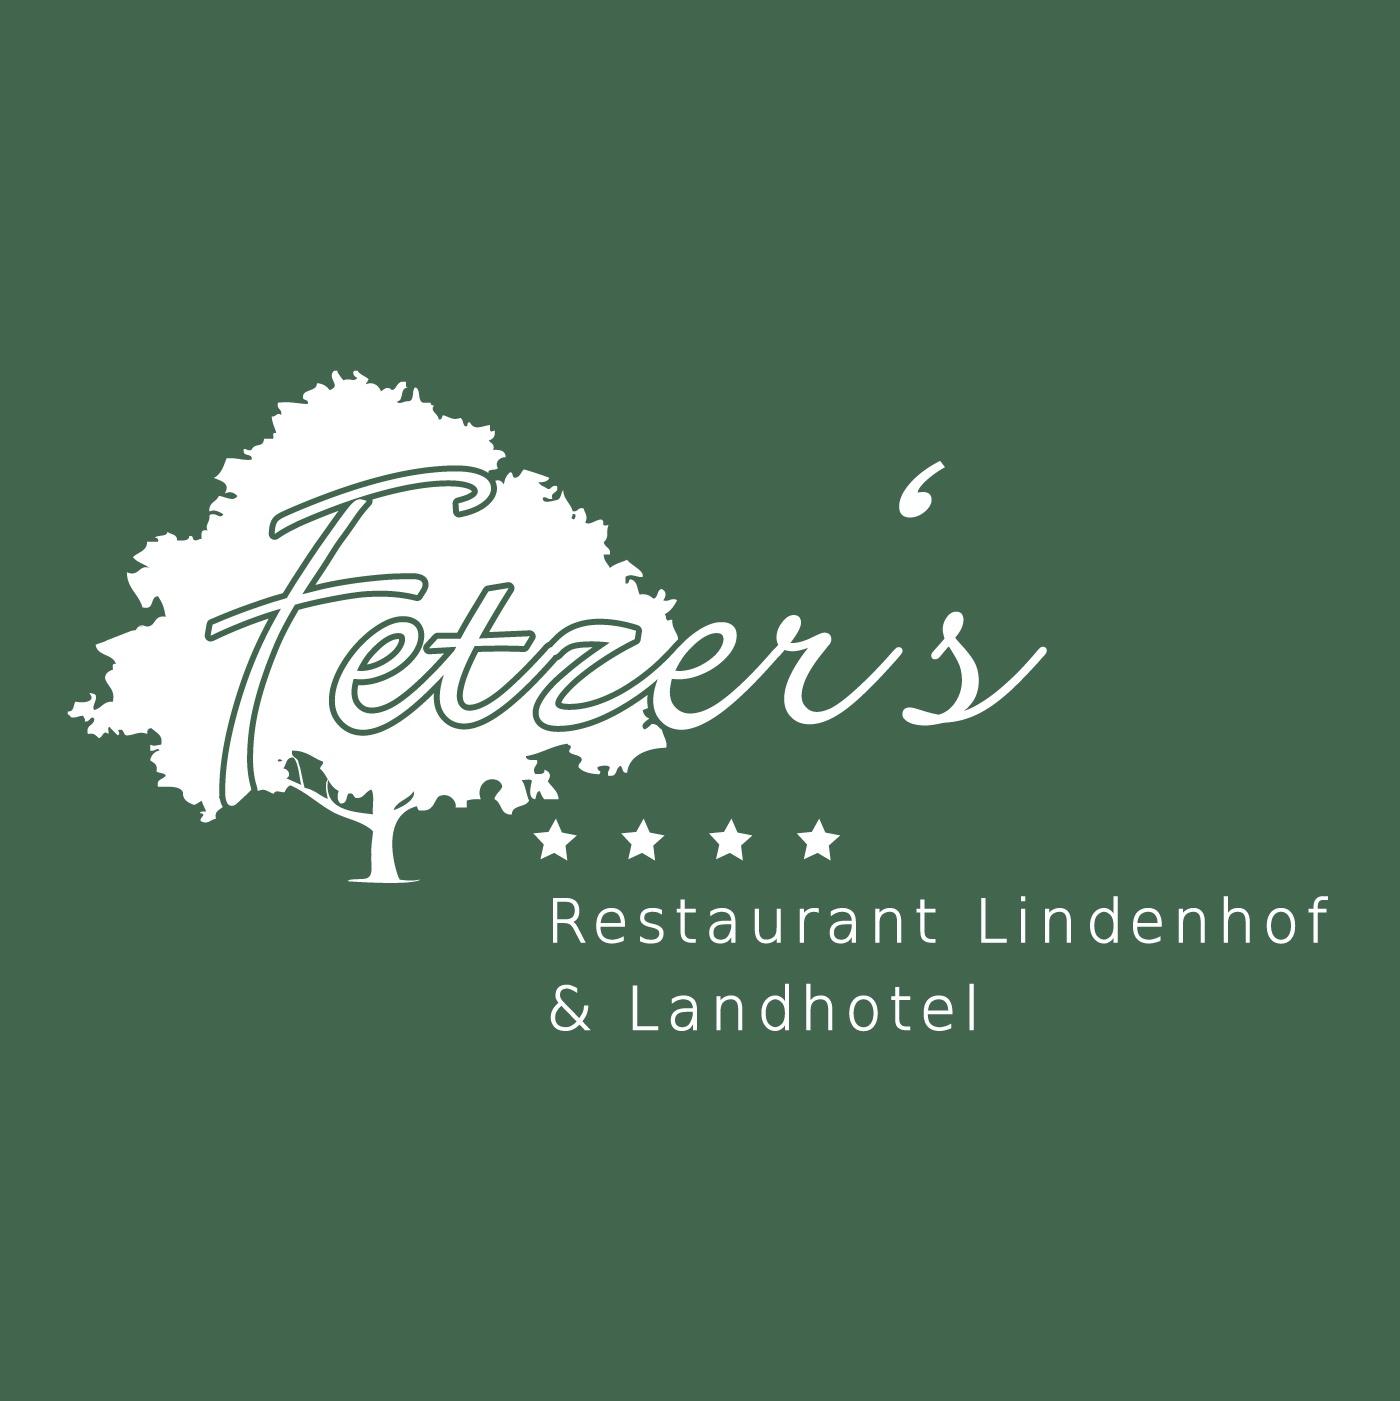 Fetzer's Landhotel & Restaurant Lindenhof